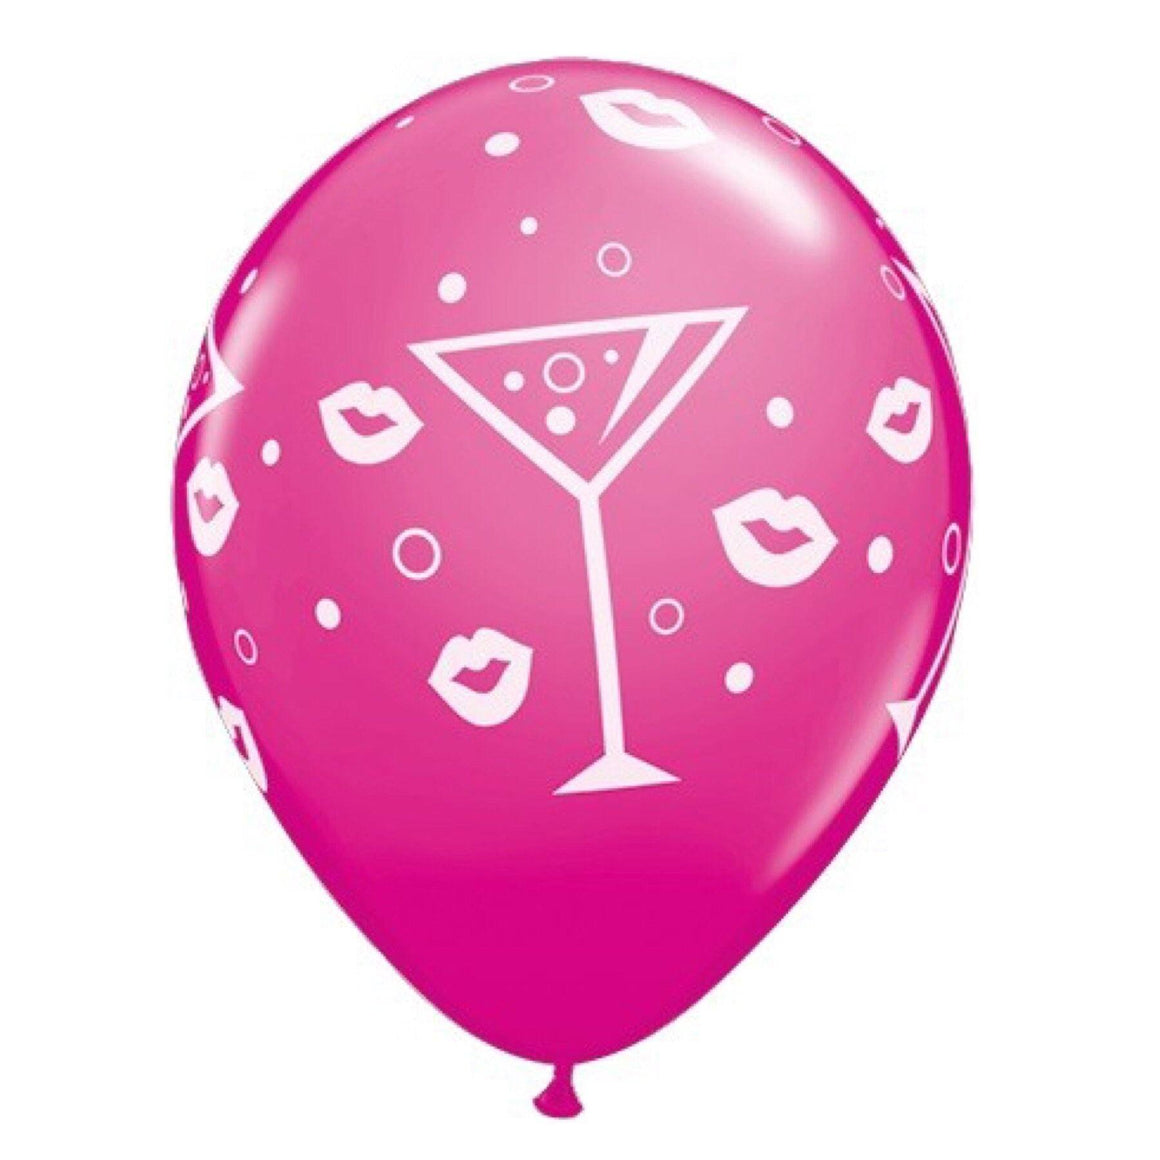 BALLOONS - 11” MIXED DRINKS, Balloons, Qualatex - Bon + Co. Party Studio